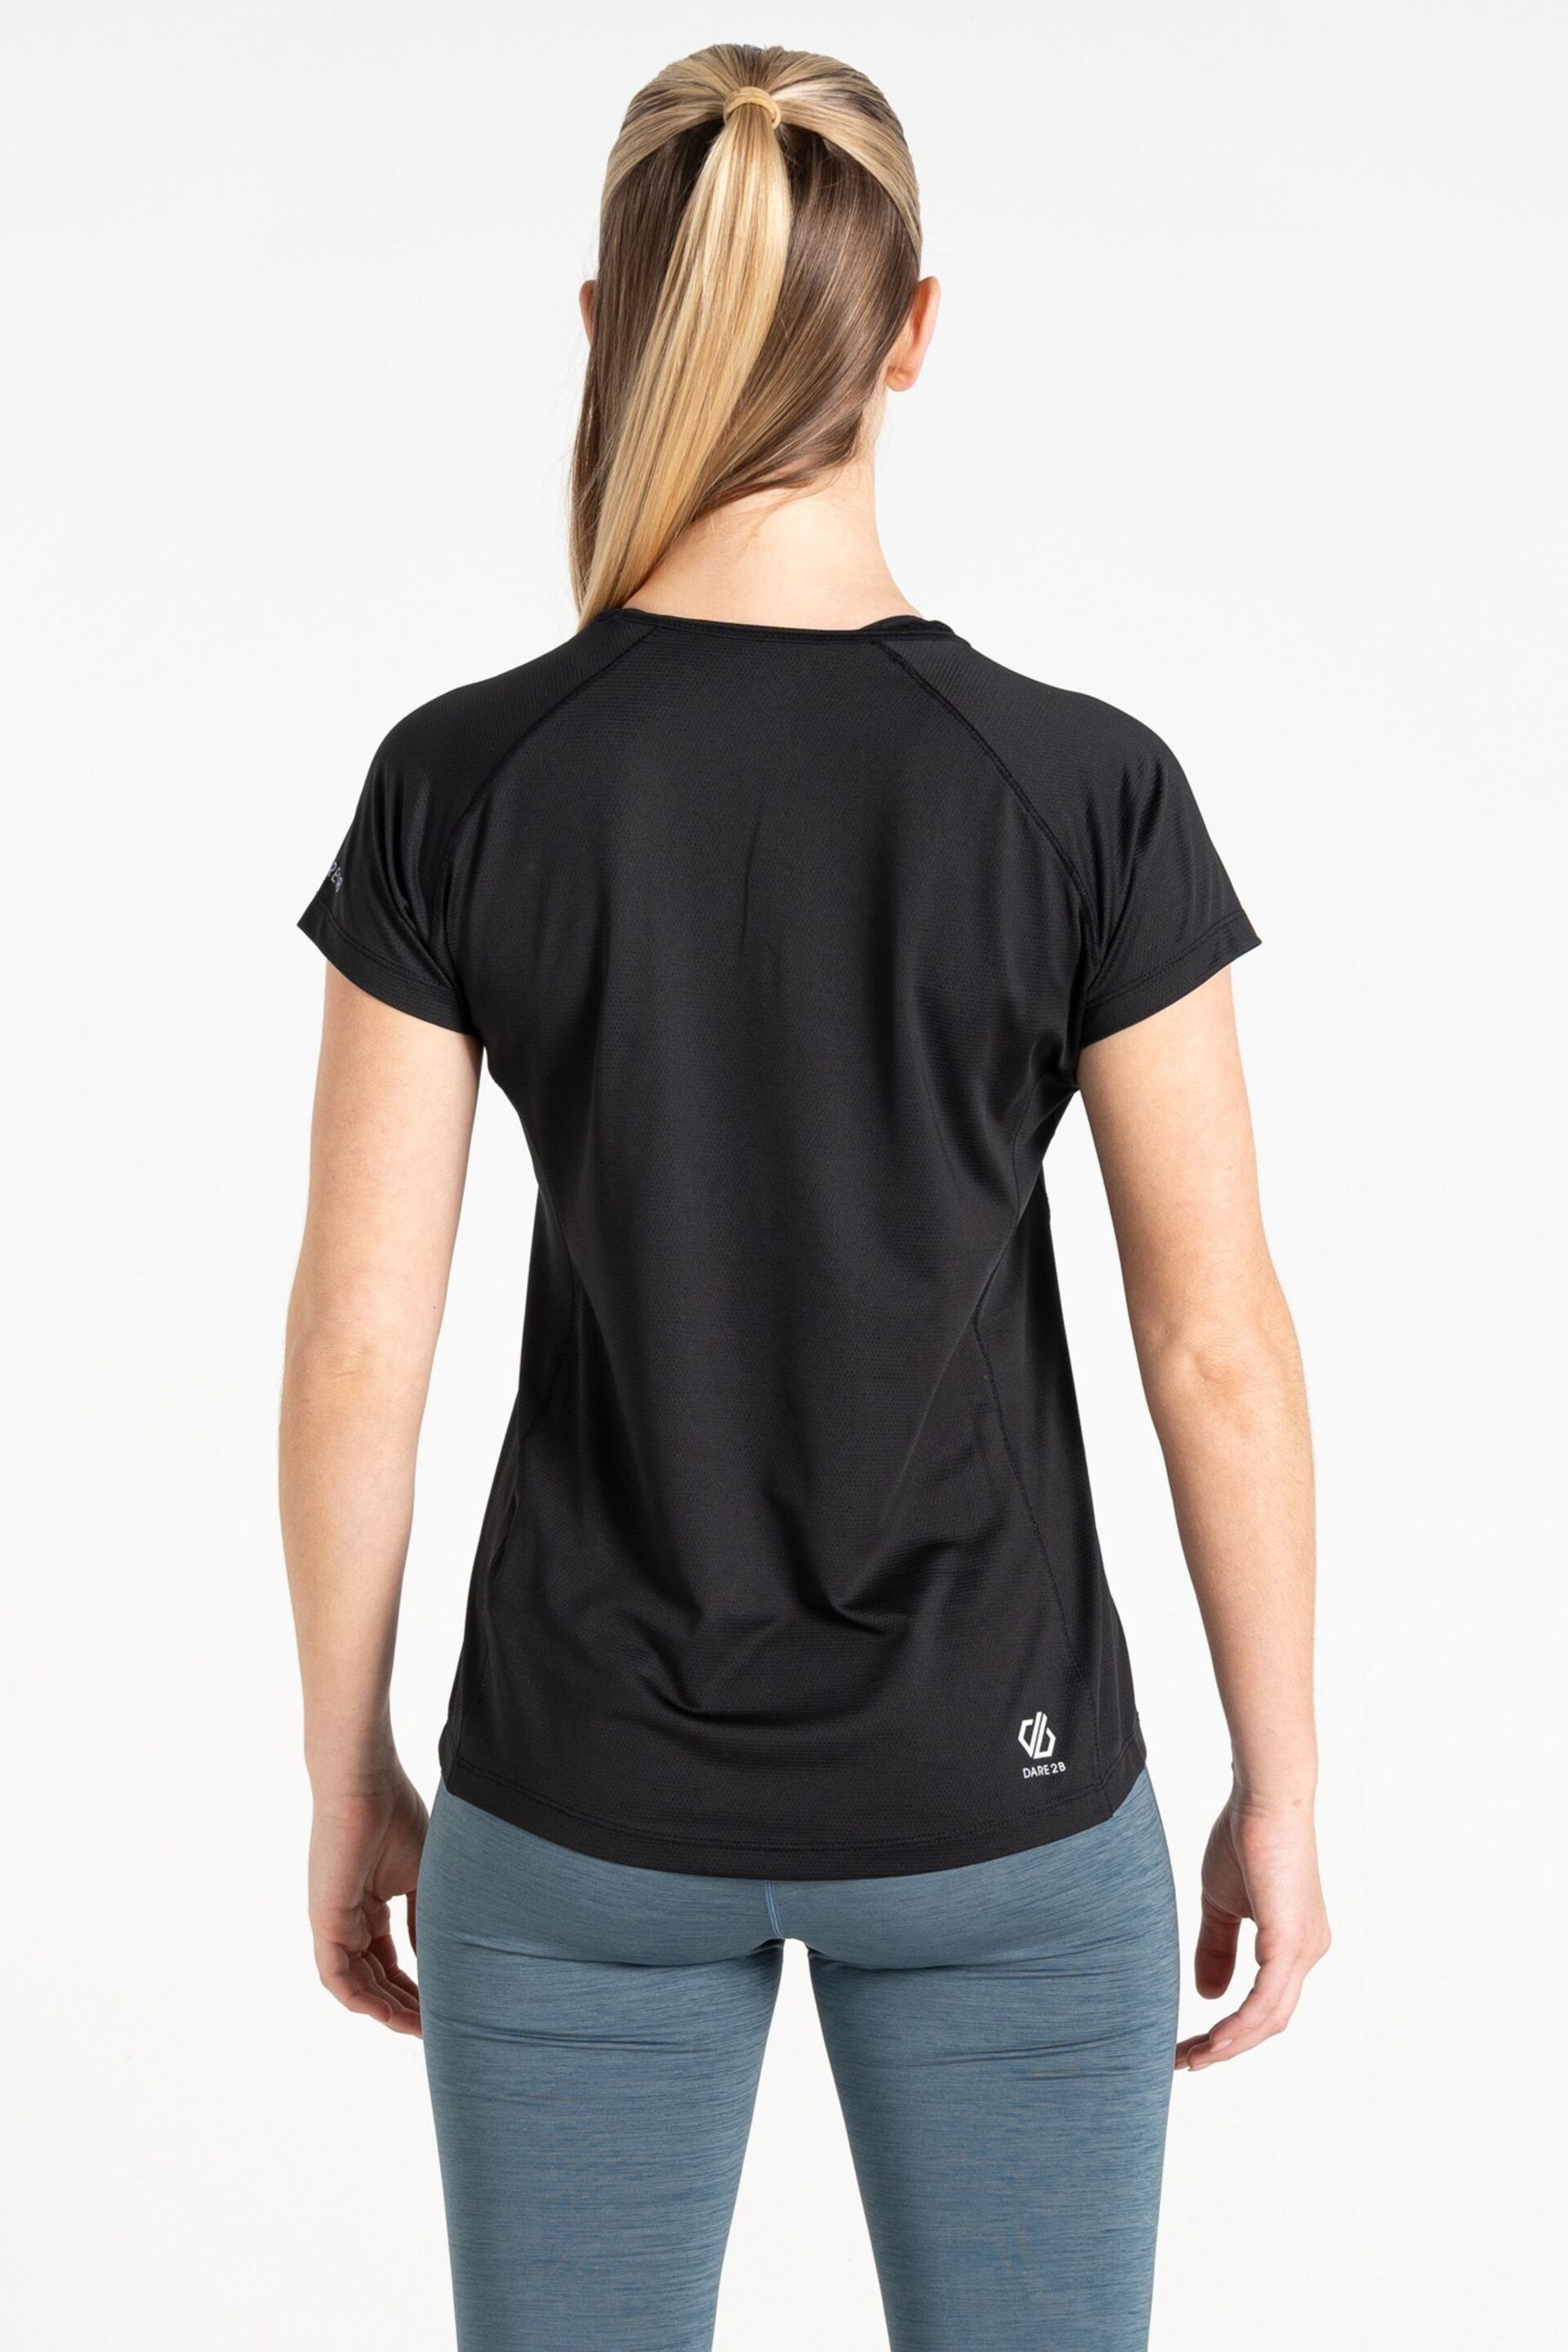 Dare 2b Corral Lightweight Black T-Shirt - Image 2 of 6